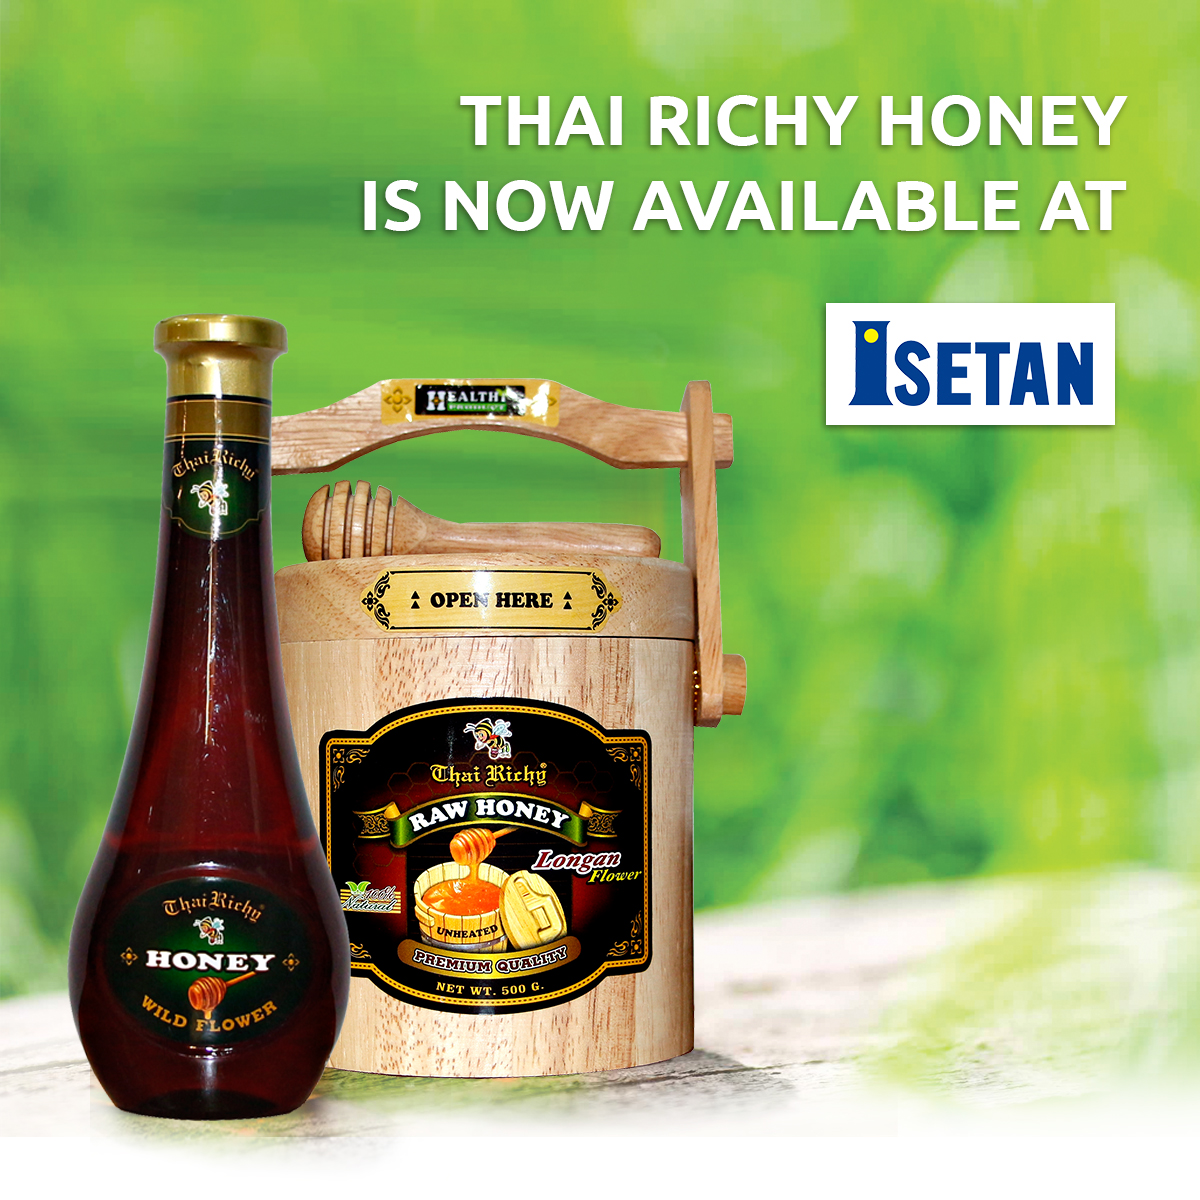 Thai Richy Honey Available at Isetan